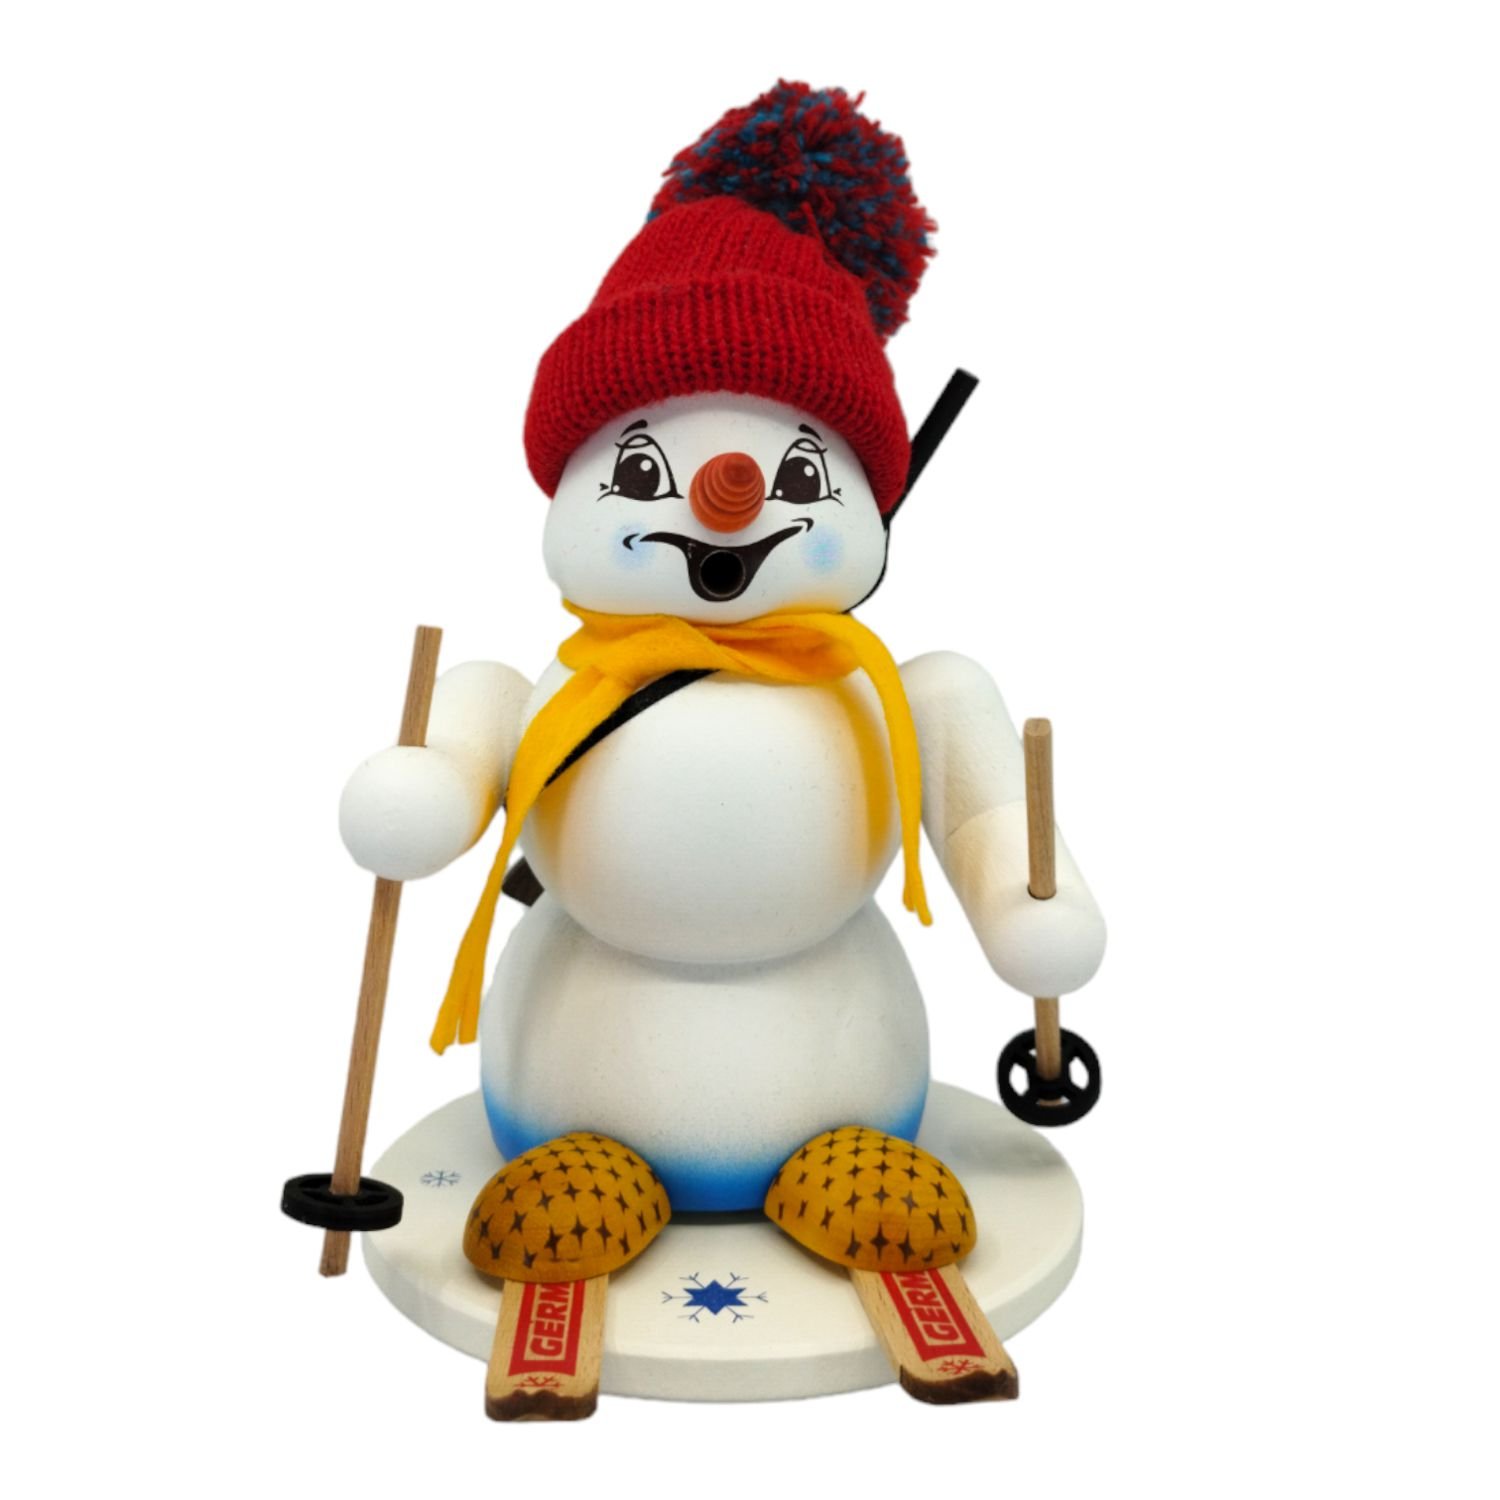 Incense figure snowman Sigi, biathlon